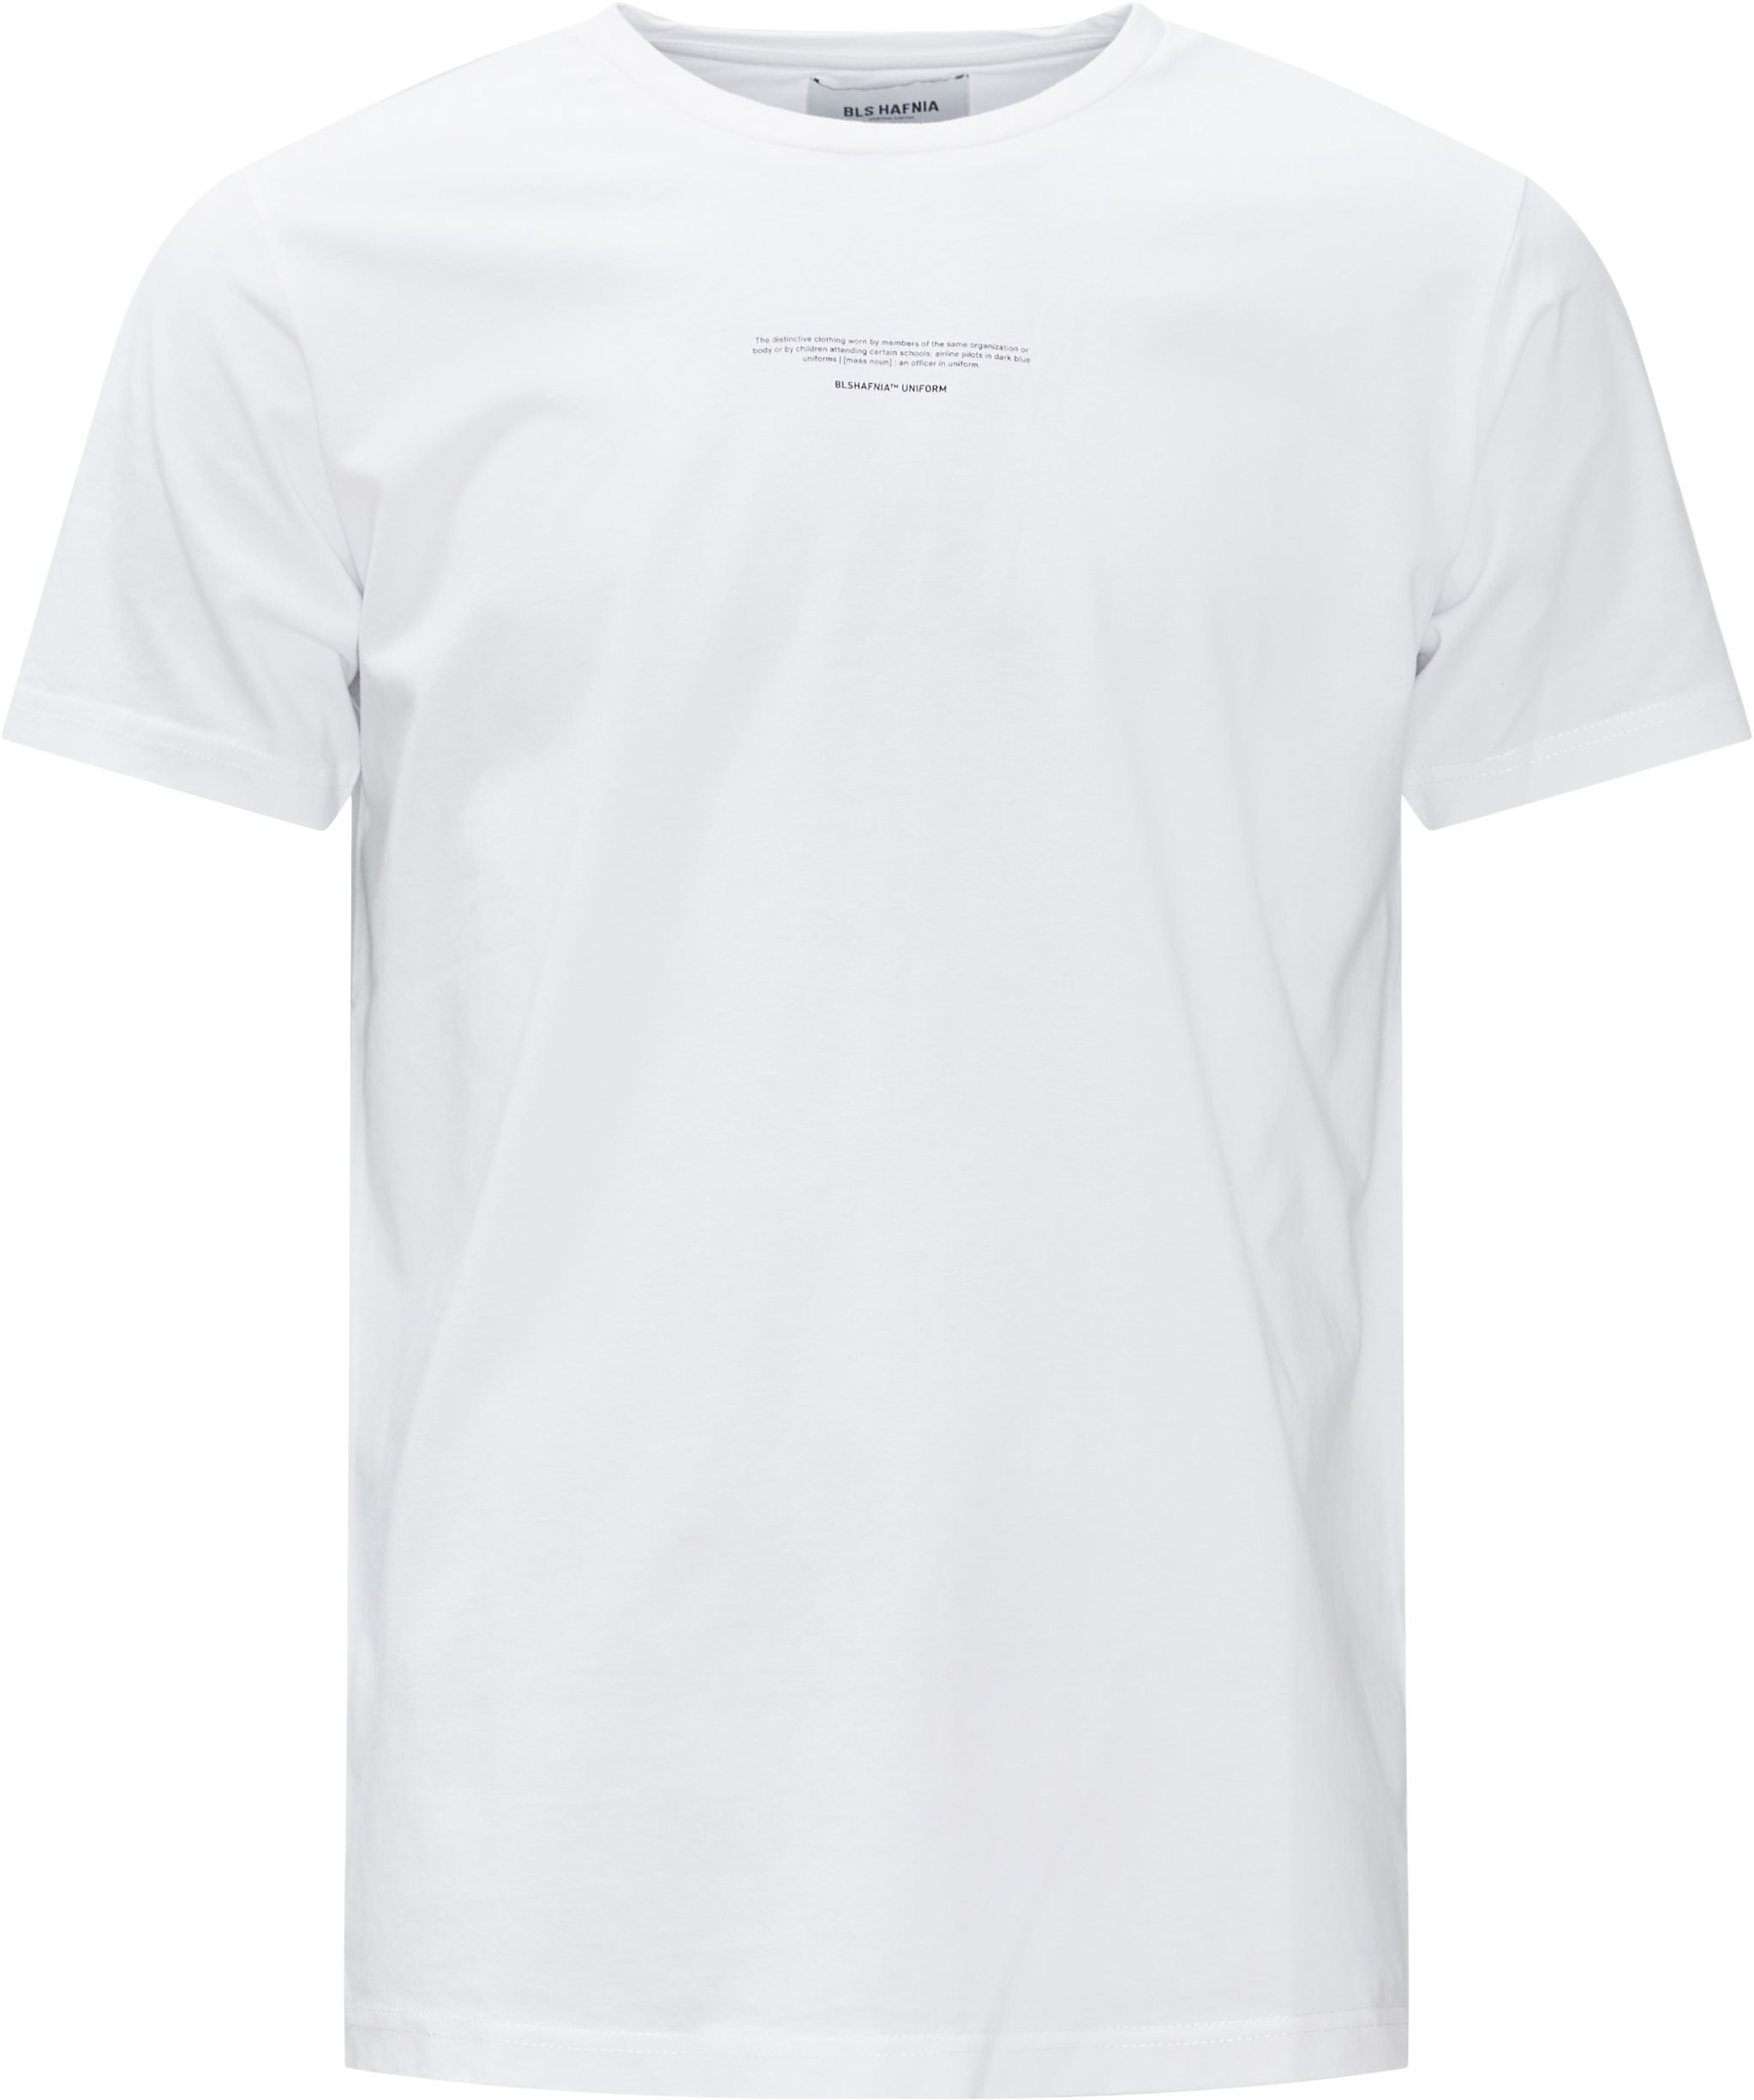 Uniform Tee - T-shirts - Regular fit - Hvid